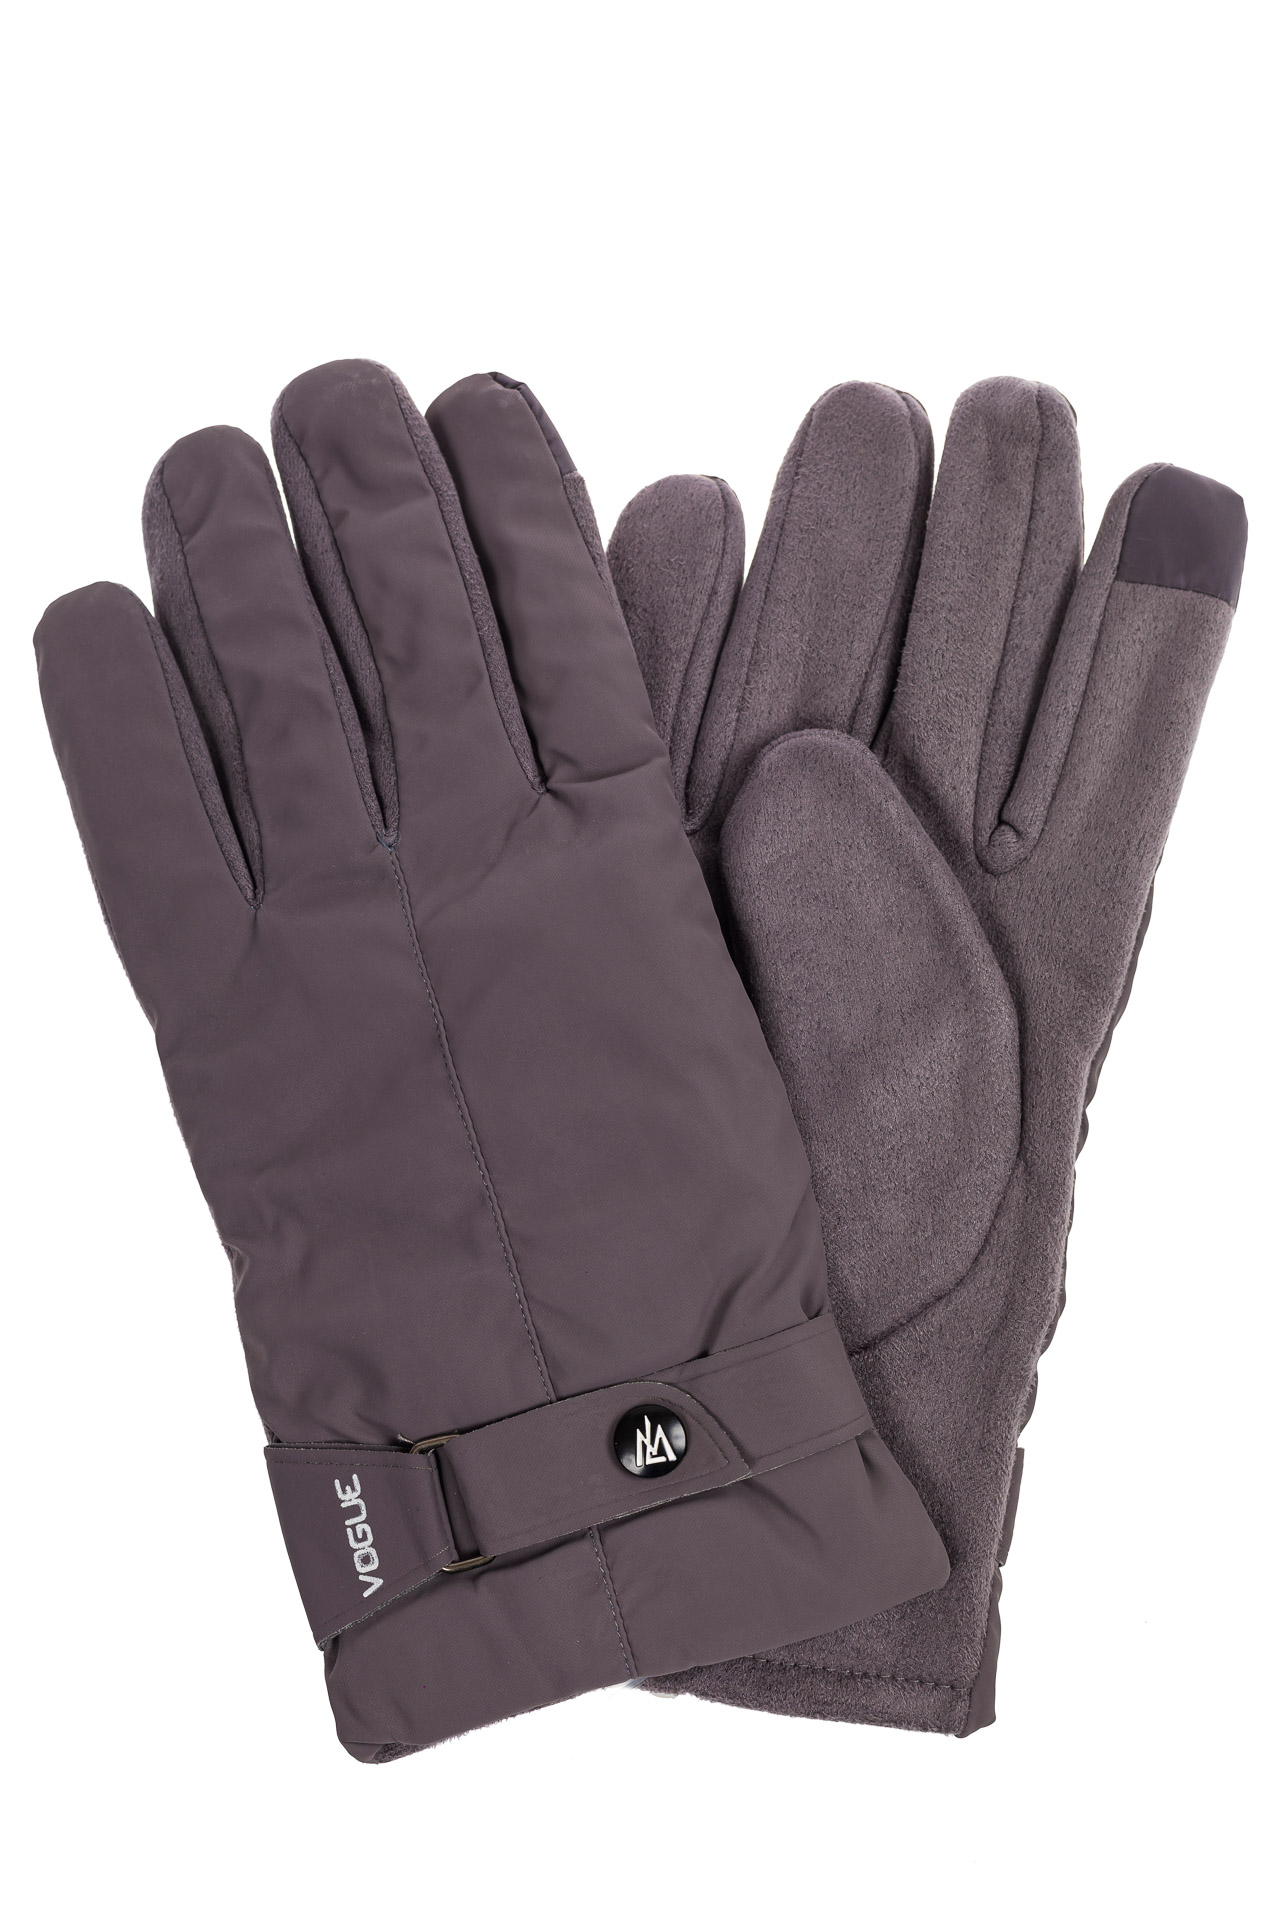 Утепленные перчатки мужские с Touch Screen, цвет серый